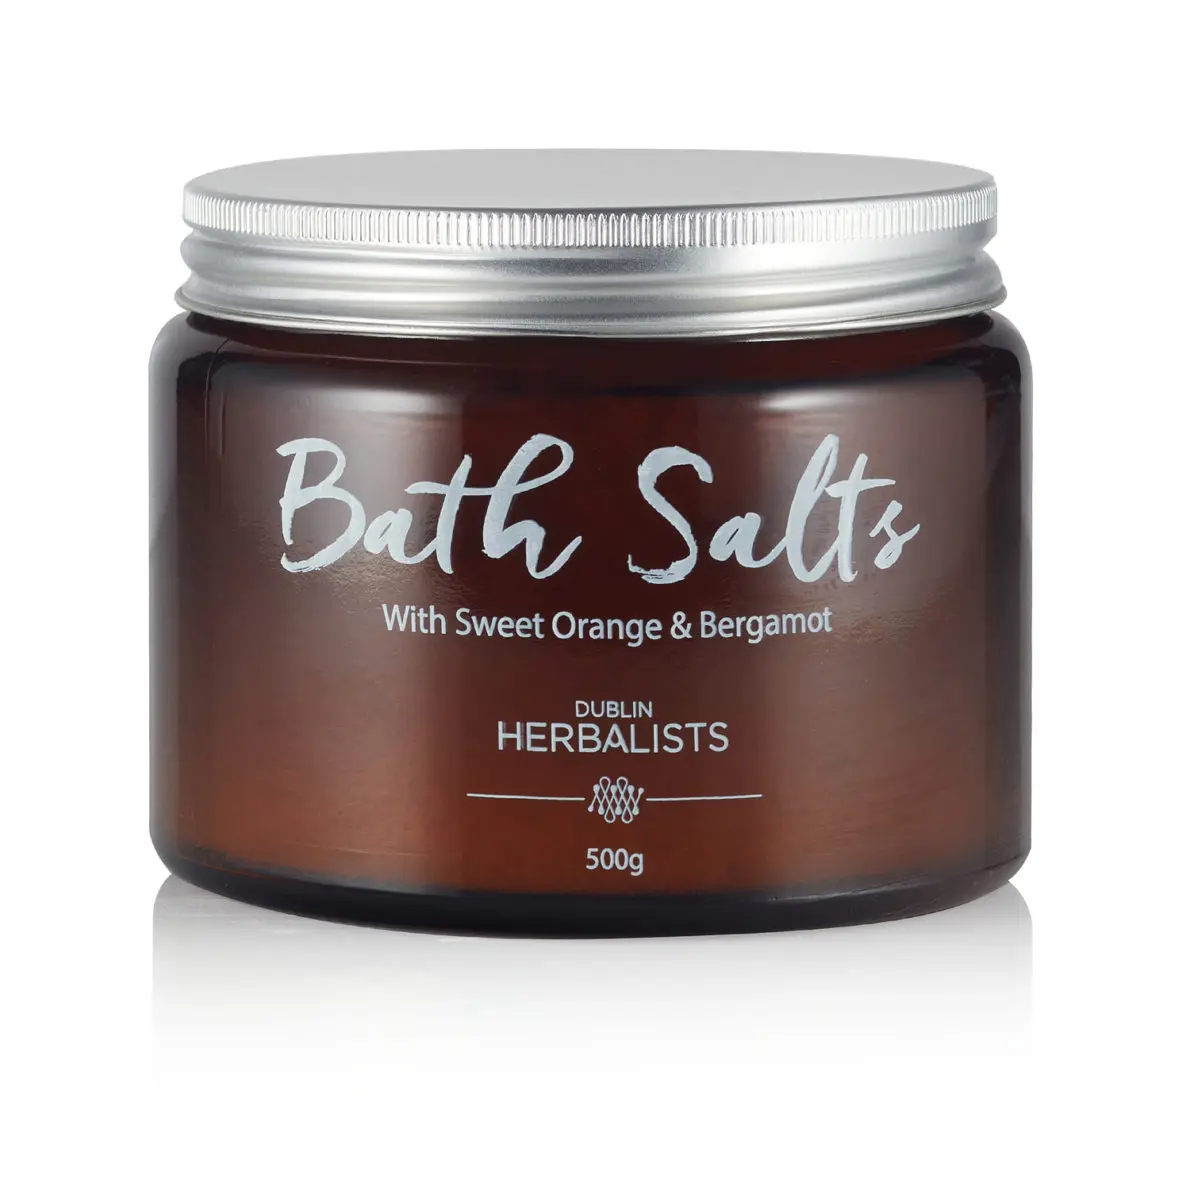 Dublin Herbalists Bath Salts with Sweet Orange & Bergamot